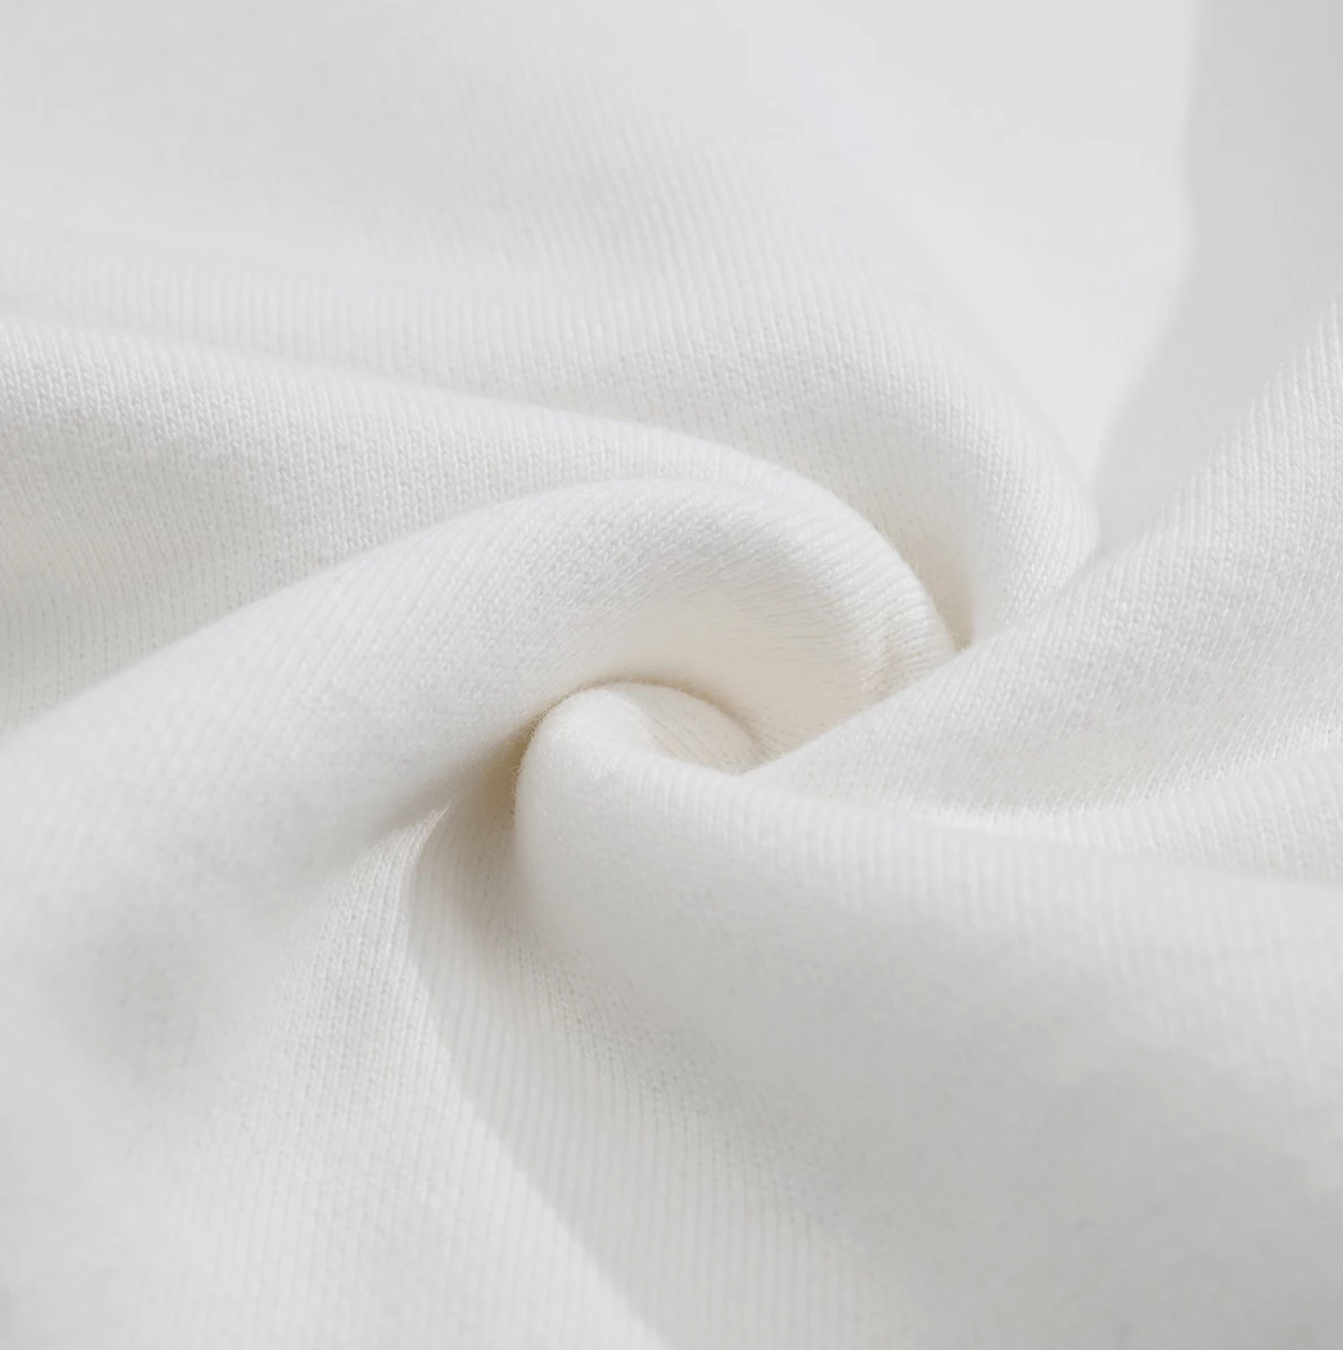 RAVEBOUND (BACK PRINT) - Unisex Fleece-lined Full-zip Hoodie